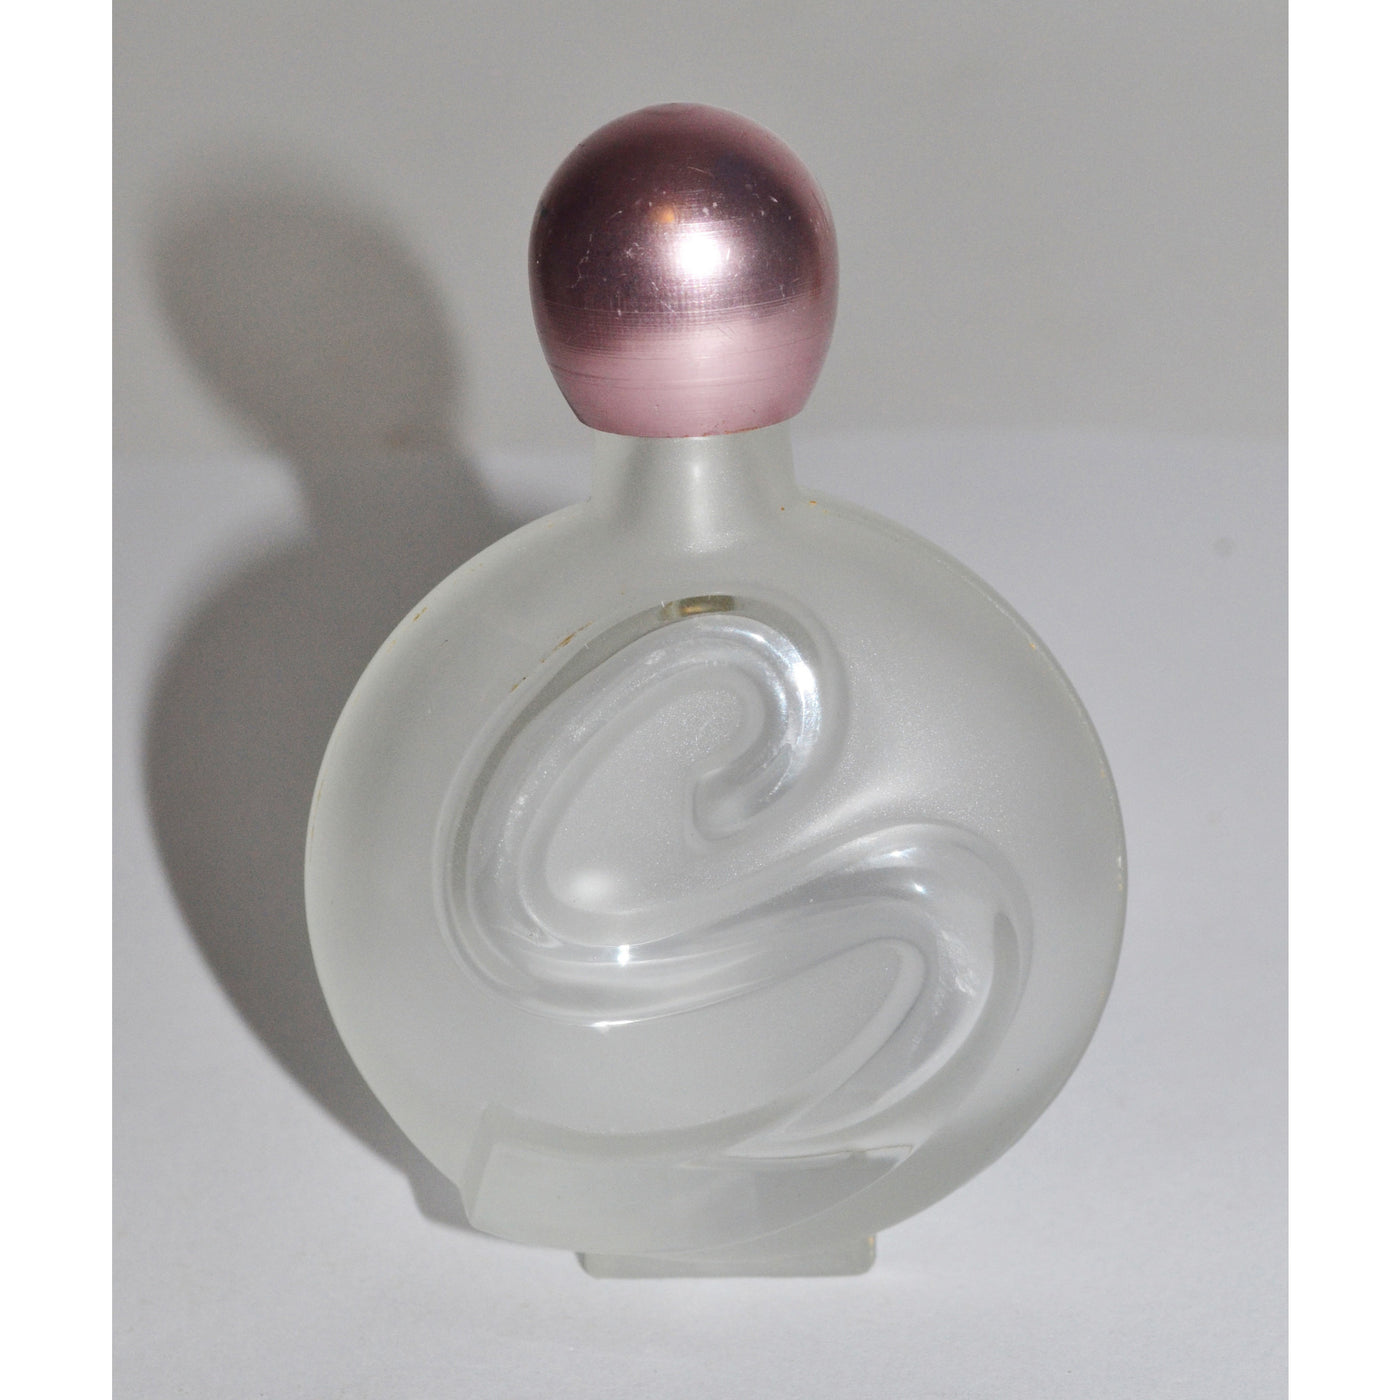 Vintage S Perfume Bottle By Schiaparelli 